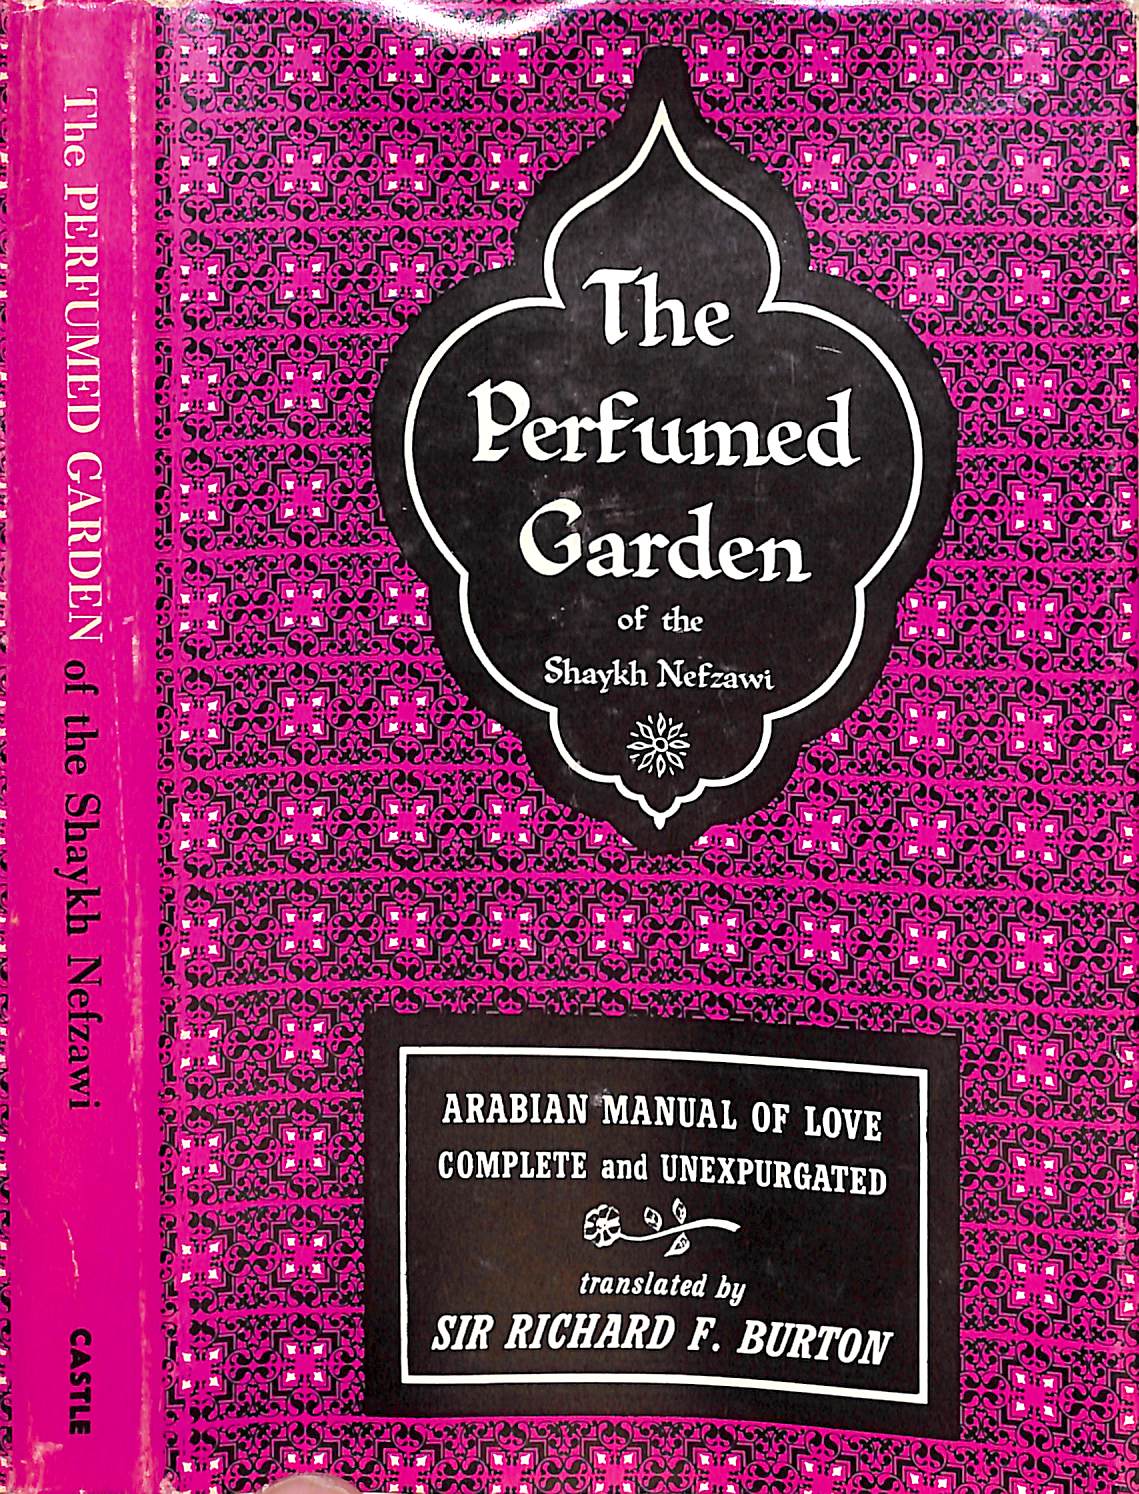 "The Perfumed Garden Of The Shaykh Nefzawi" 1964 BURTON, Sir Richard F. [translated by]